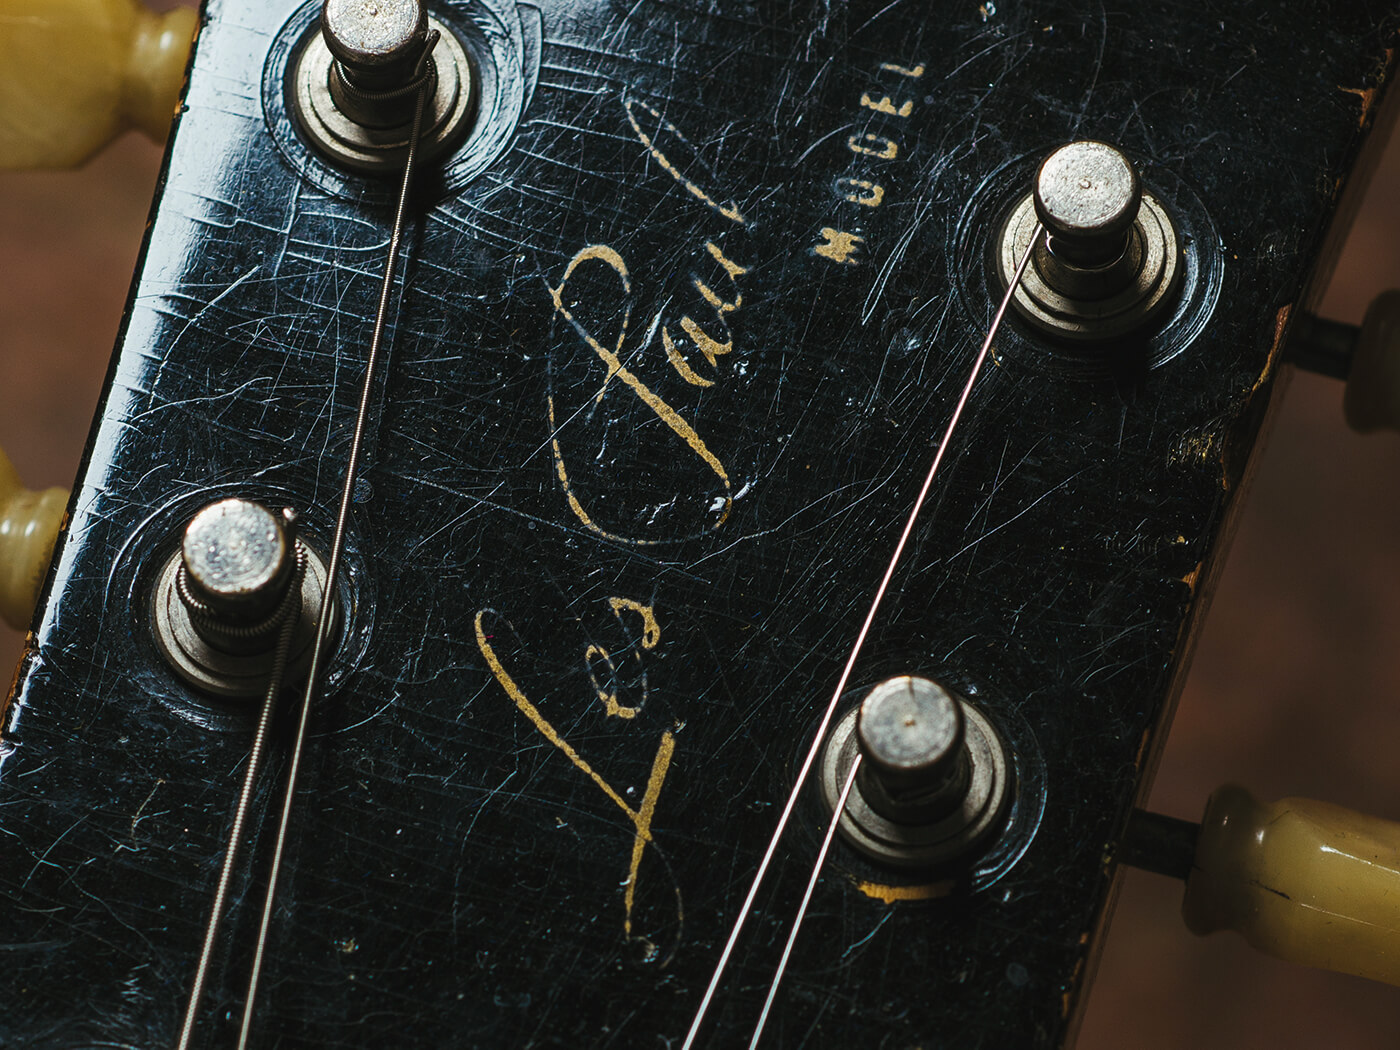 Gibson Les Paul history